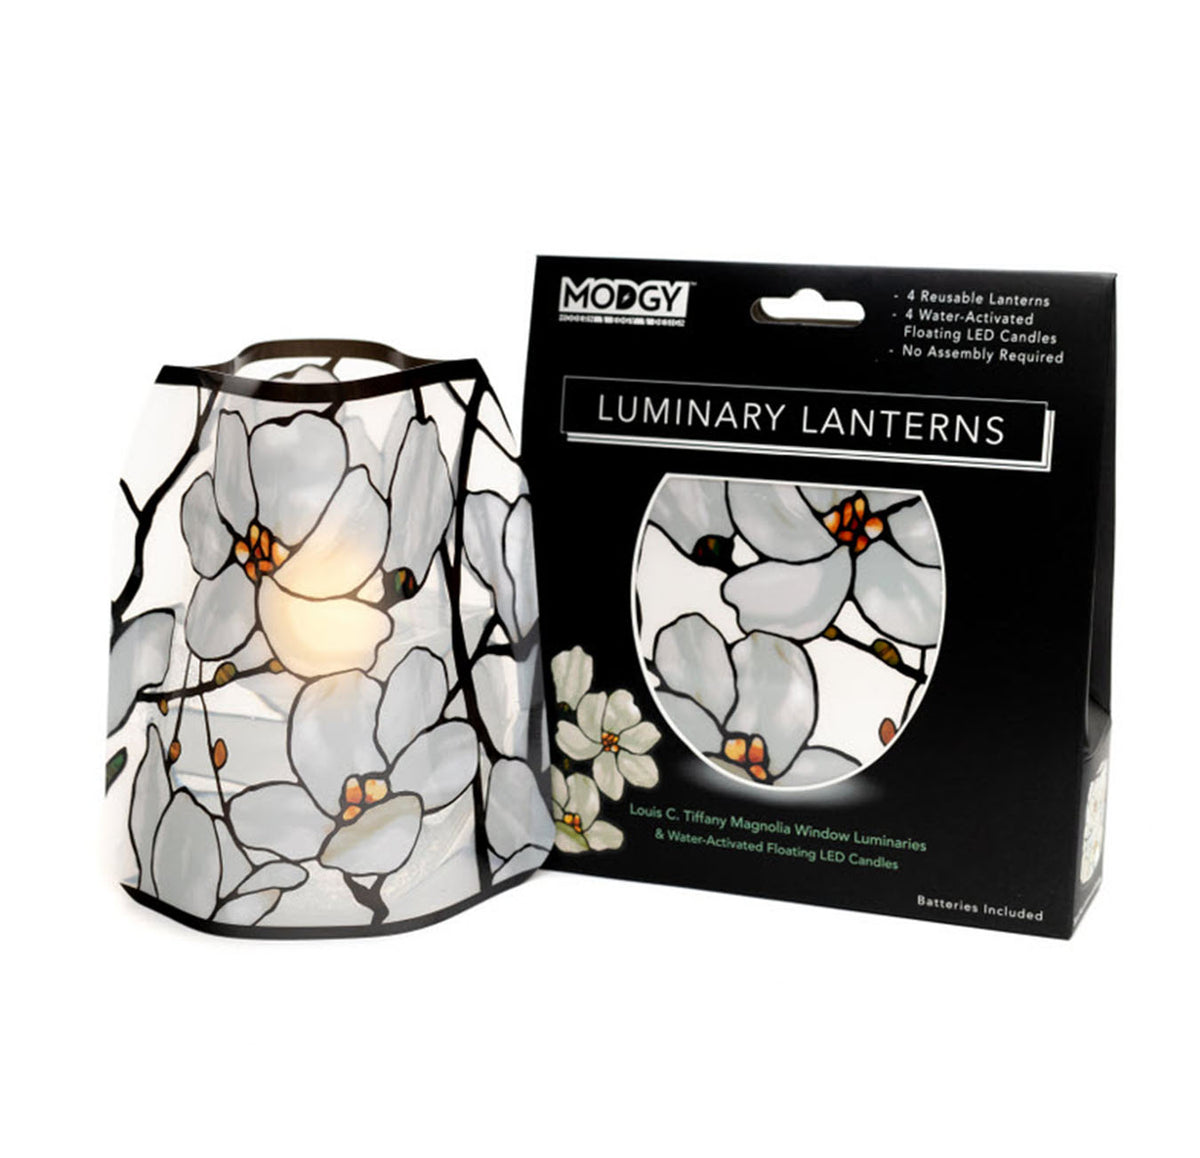 Modgy Luminary Lanterns